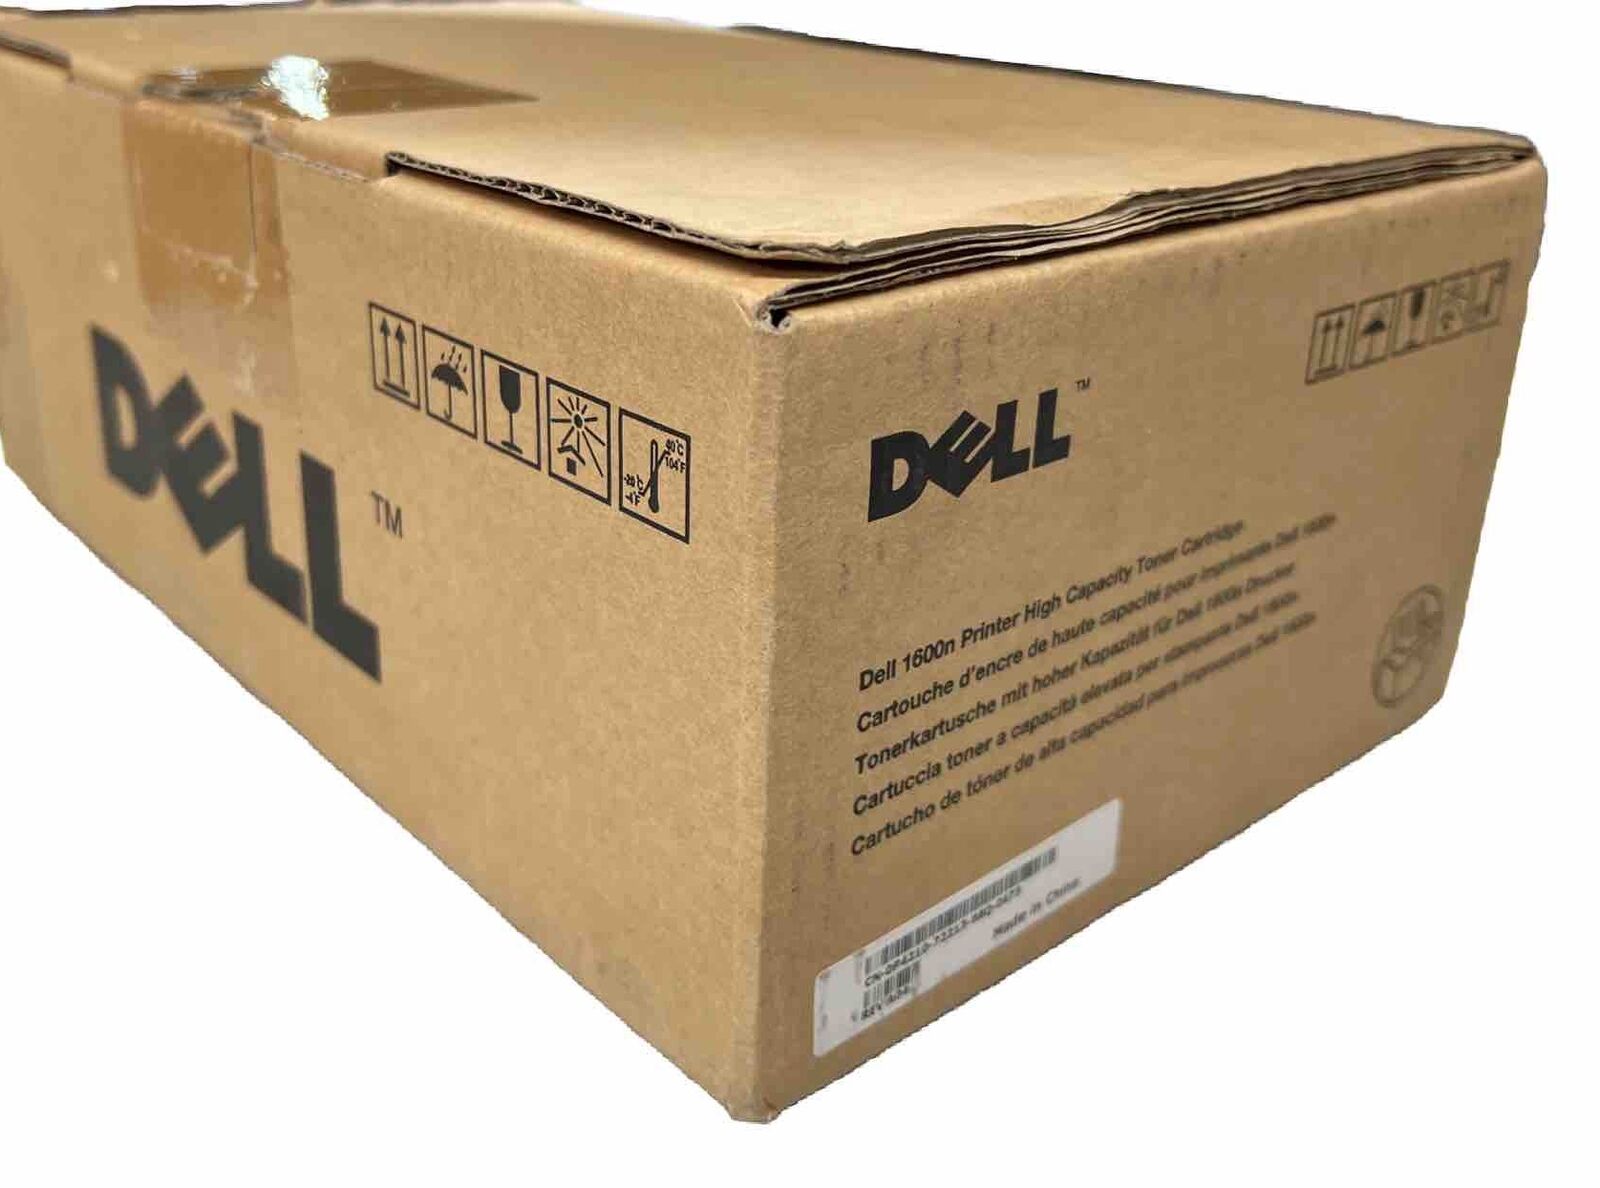 Dell 1600n High Capacity Toner Cartridge Black Genuine P4210- New Imperfect Box